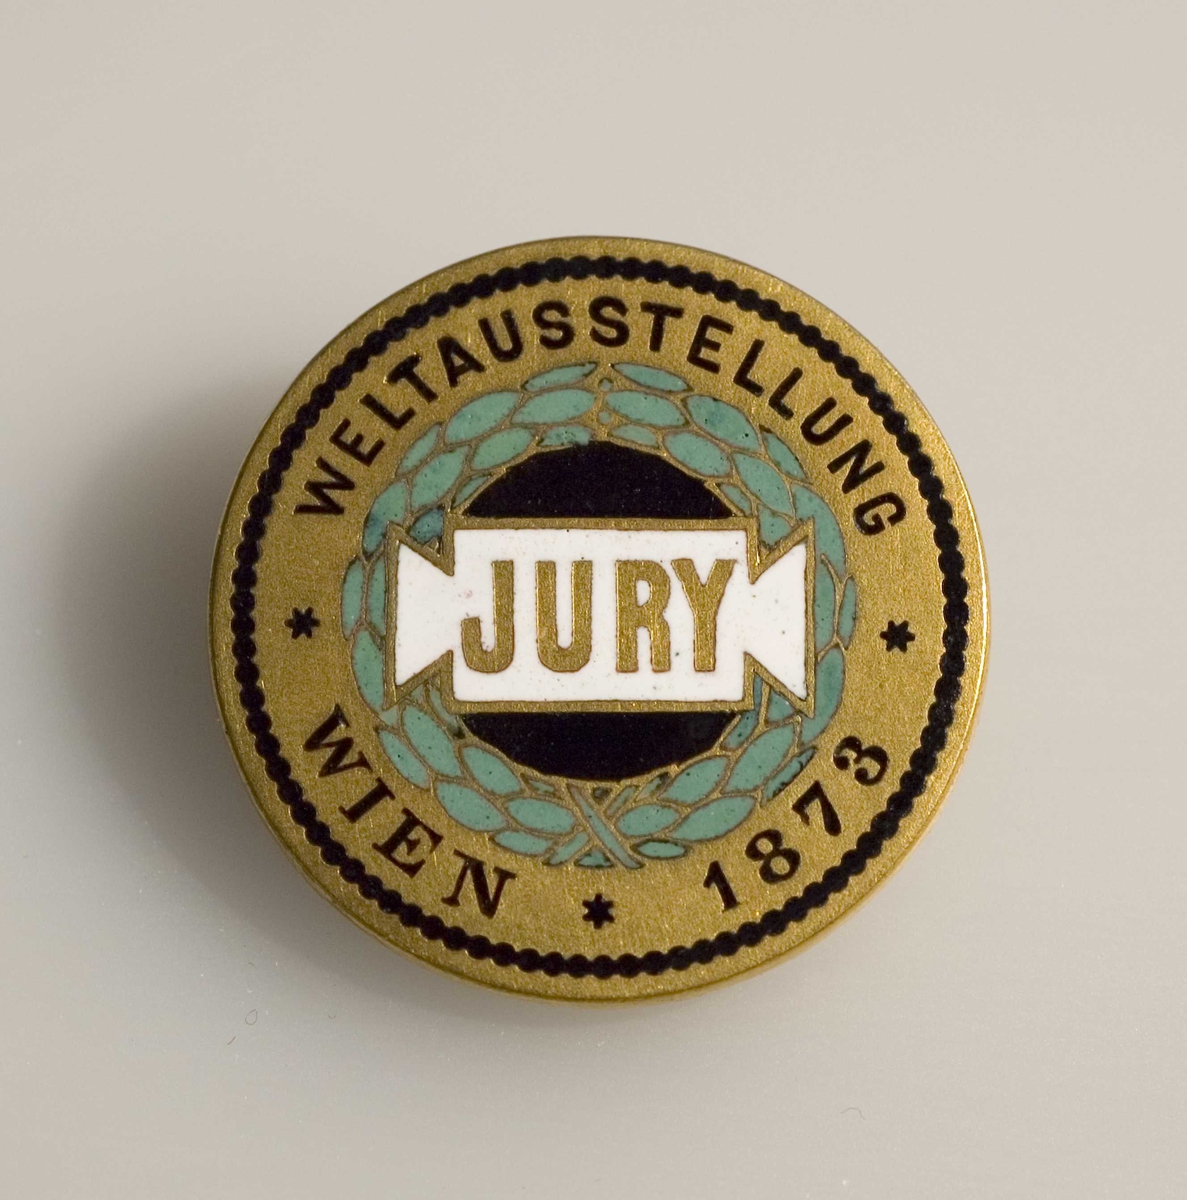 Oppstillingsliste: " Juryknapp / Metall med trykk / Innskrift: Weltausstellung Wien 1873."
